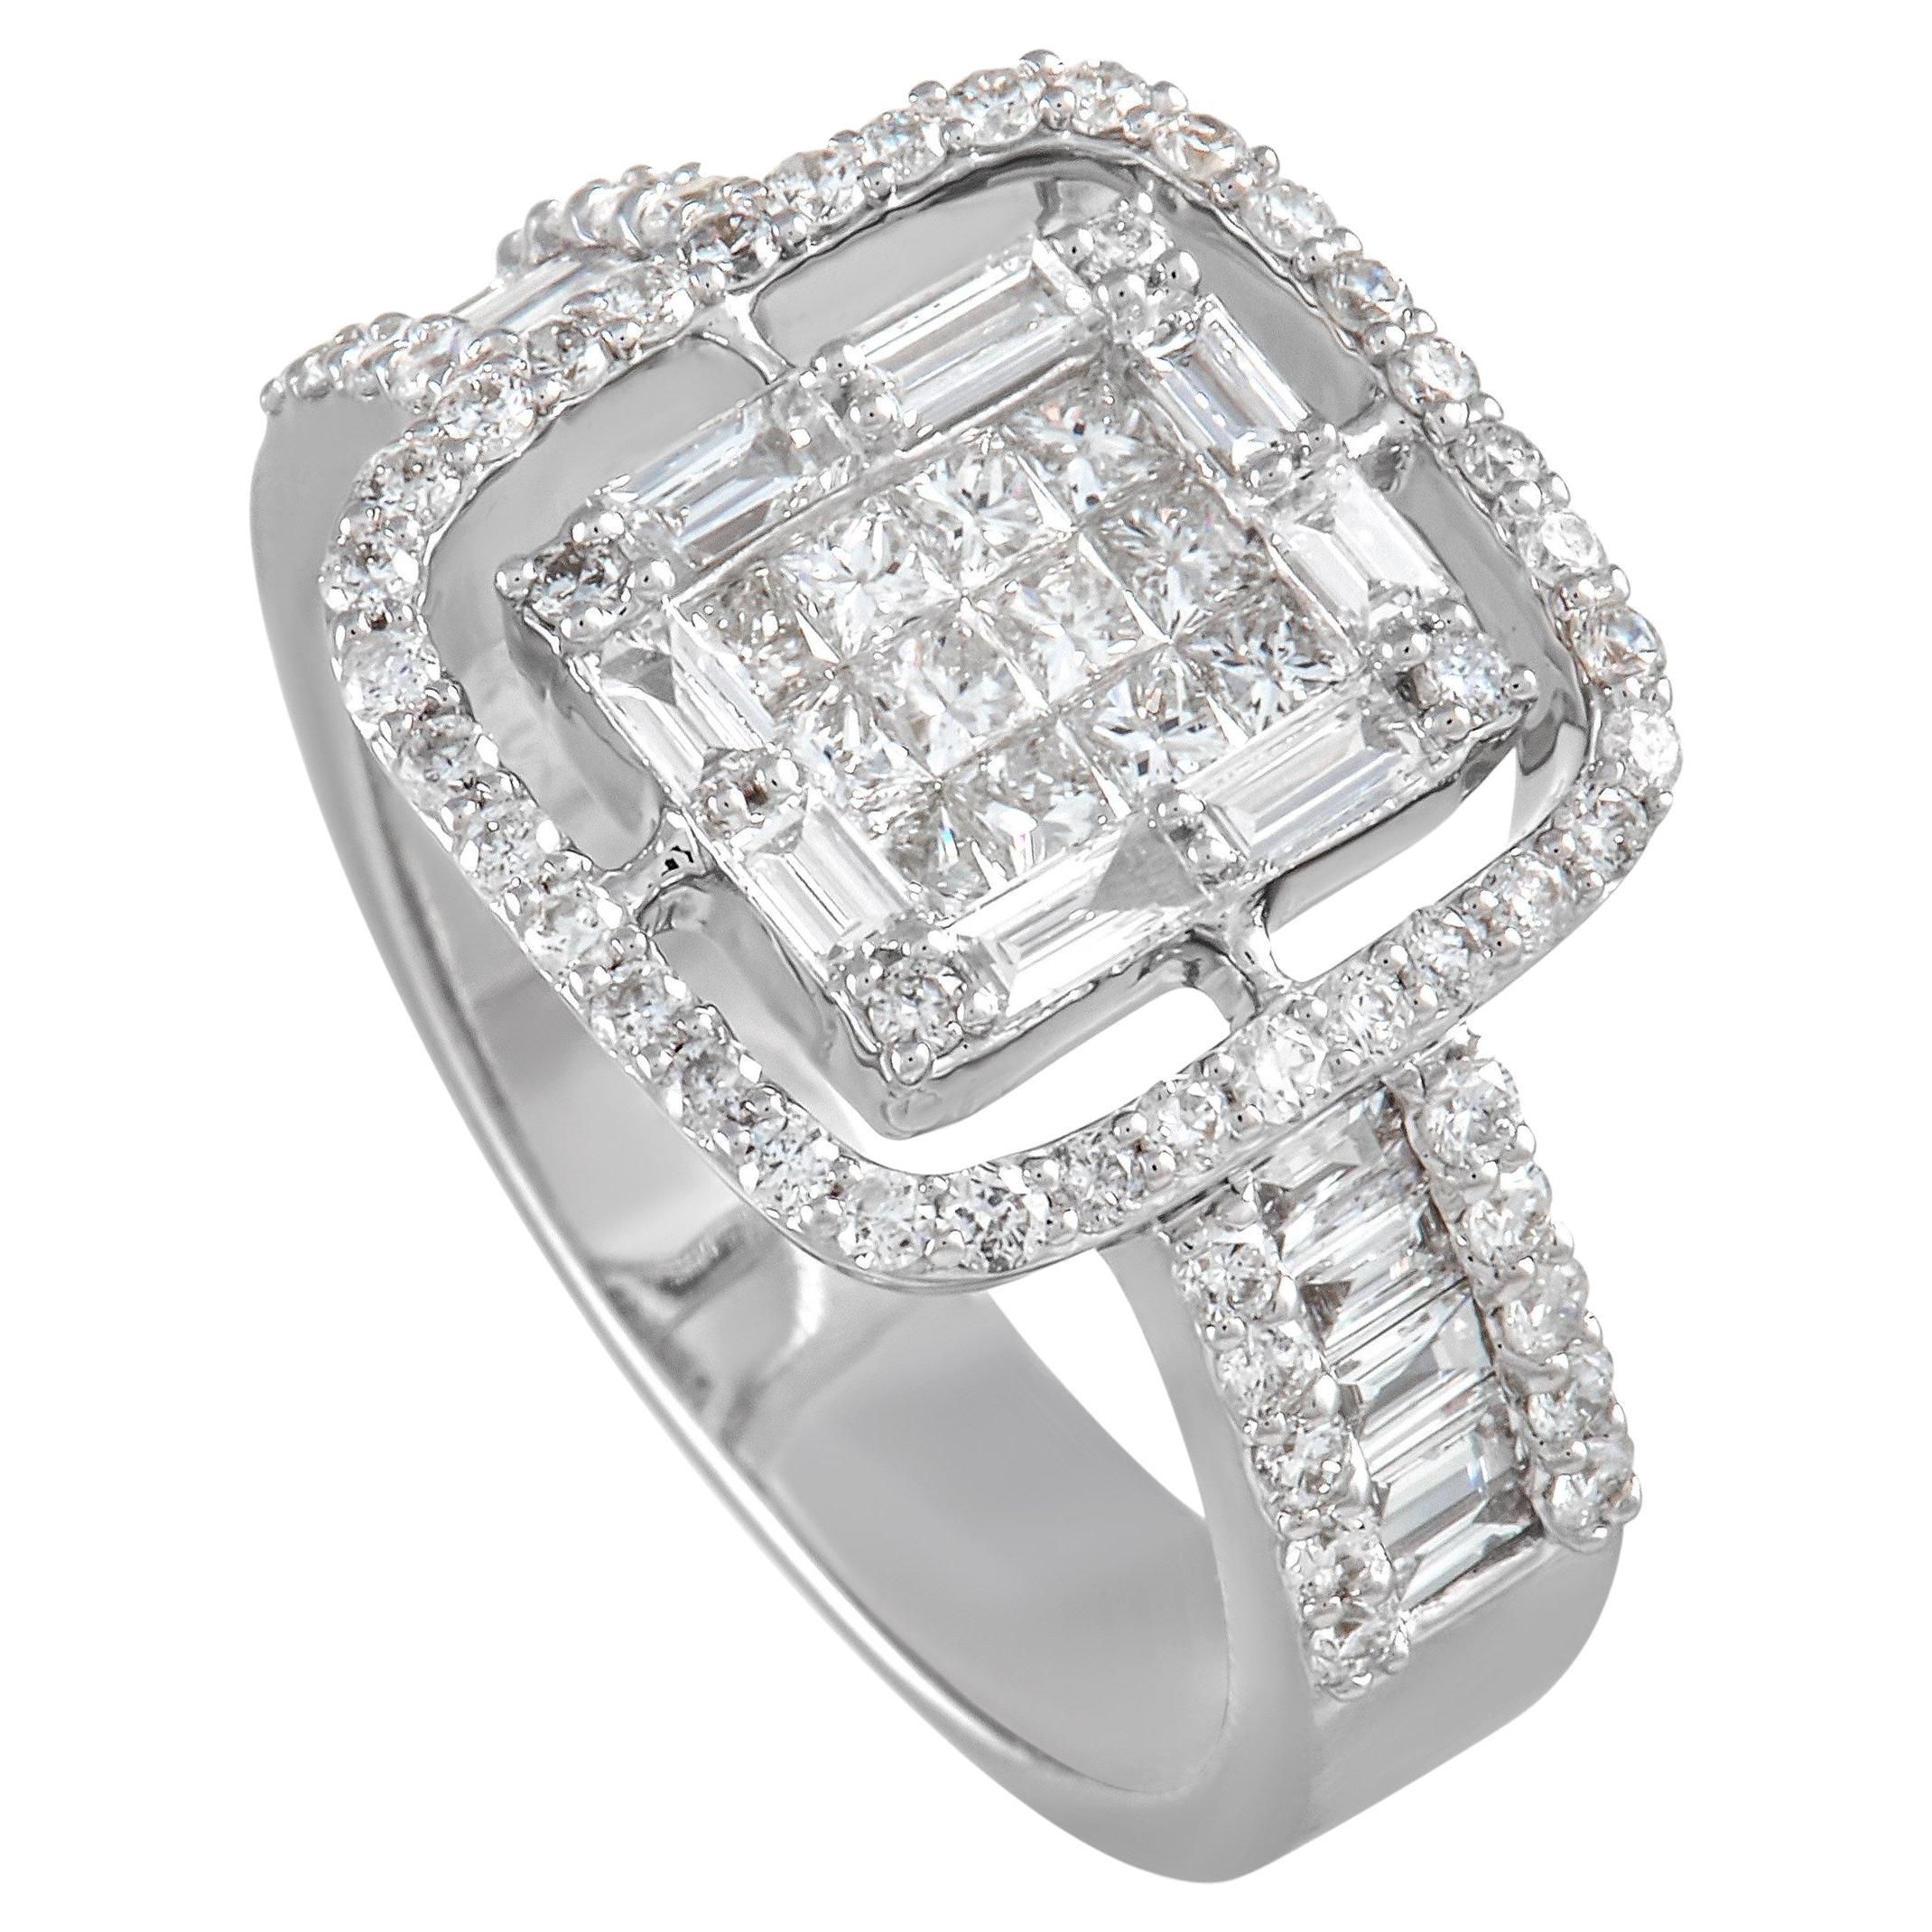 LB Exclusive 14K White Gold 1.37 Ct Diamond Ring